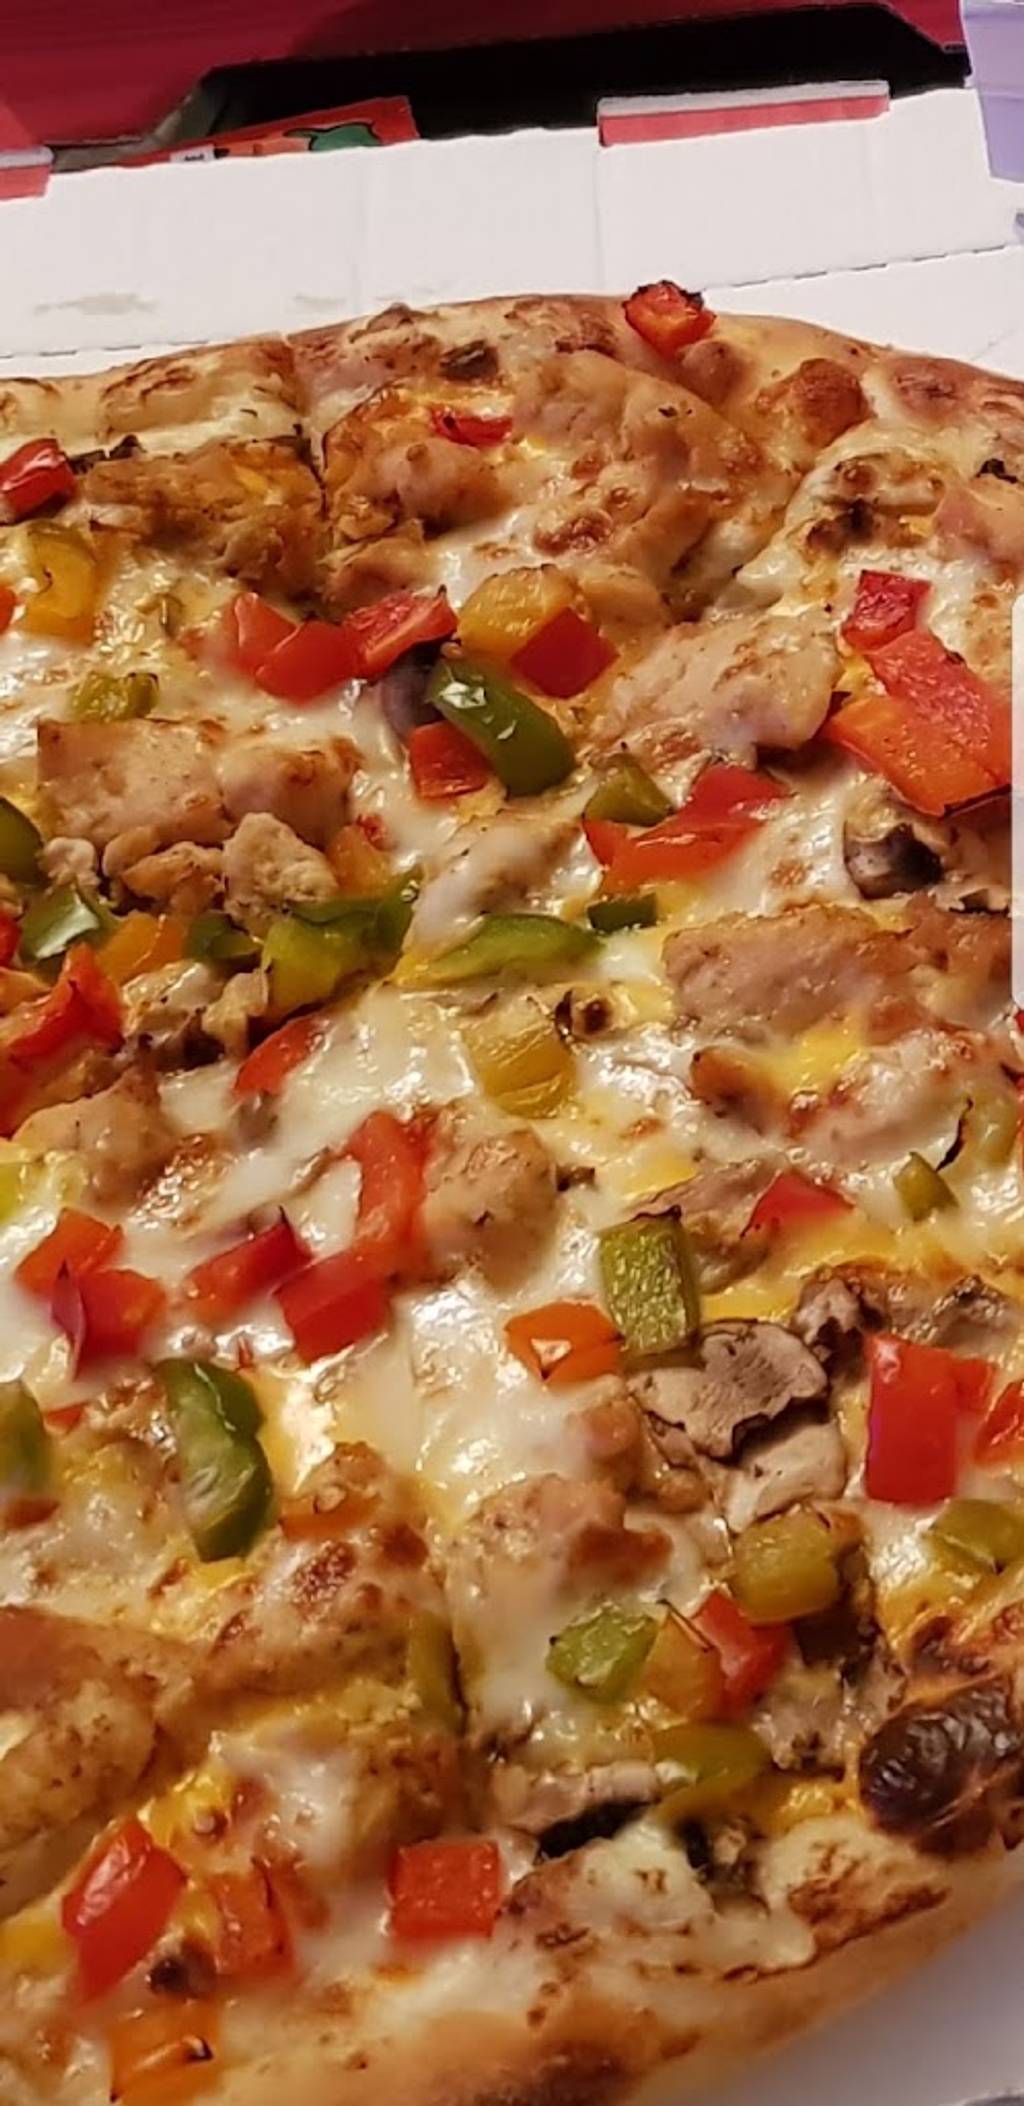 POPPIE’S PIZZA CERGY Cergy - Dish Food Cuisine Pizza California-style pizza